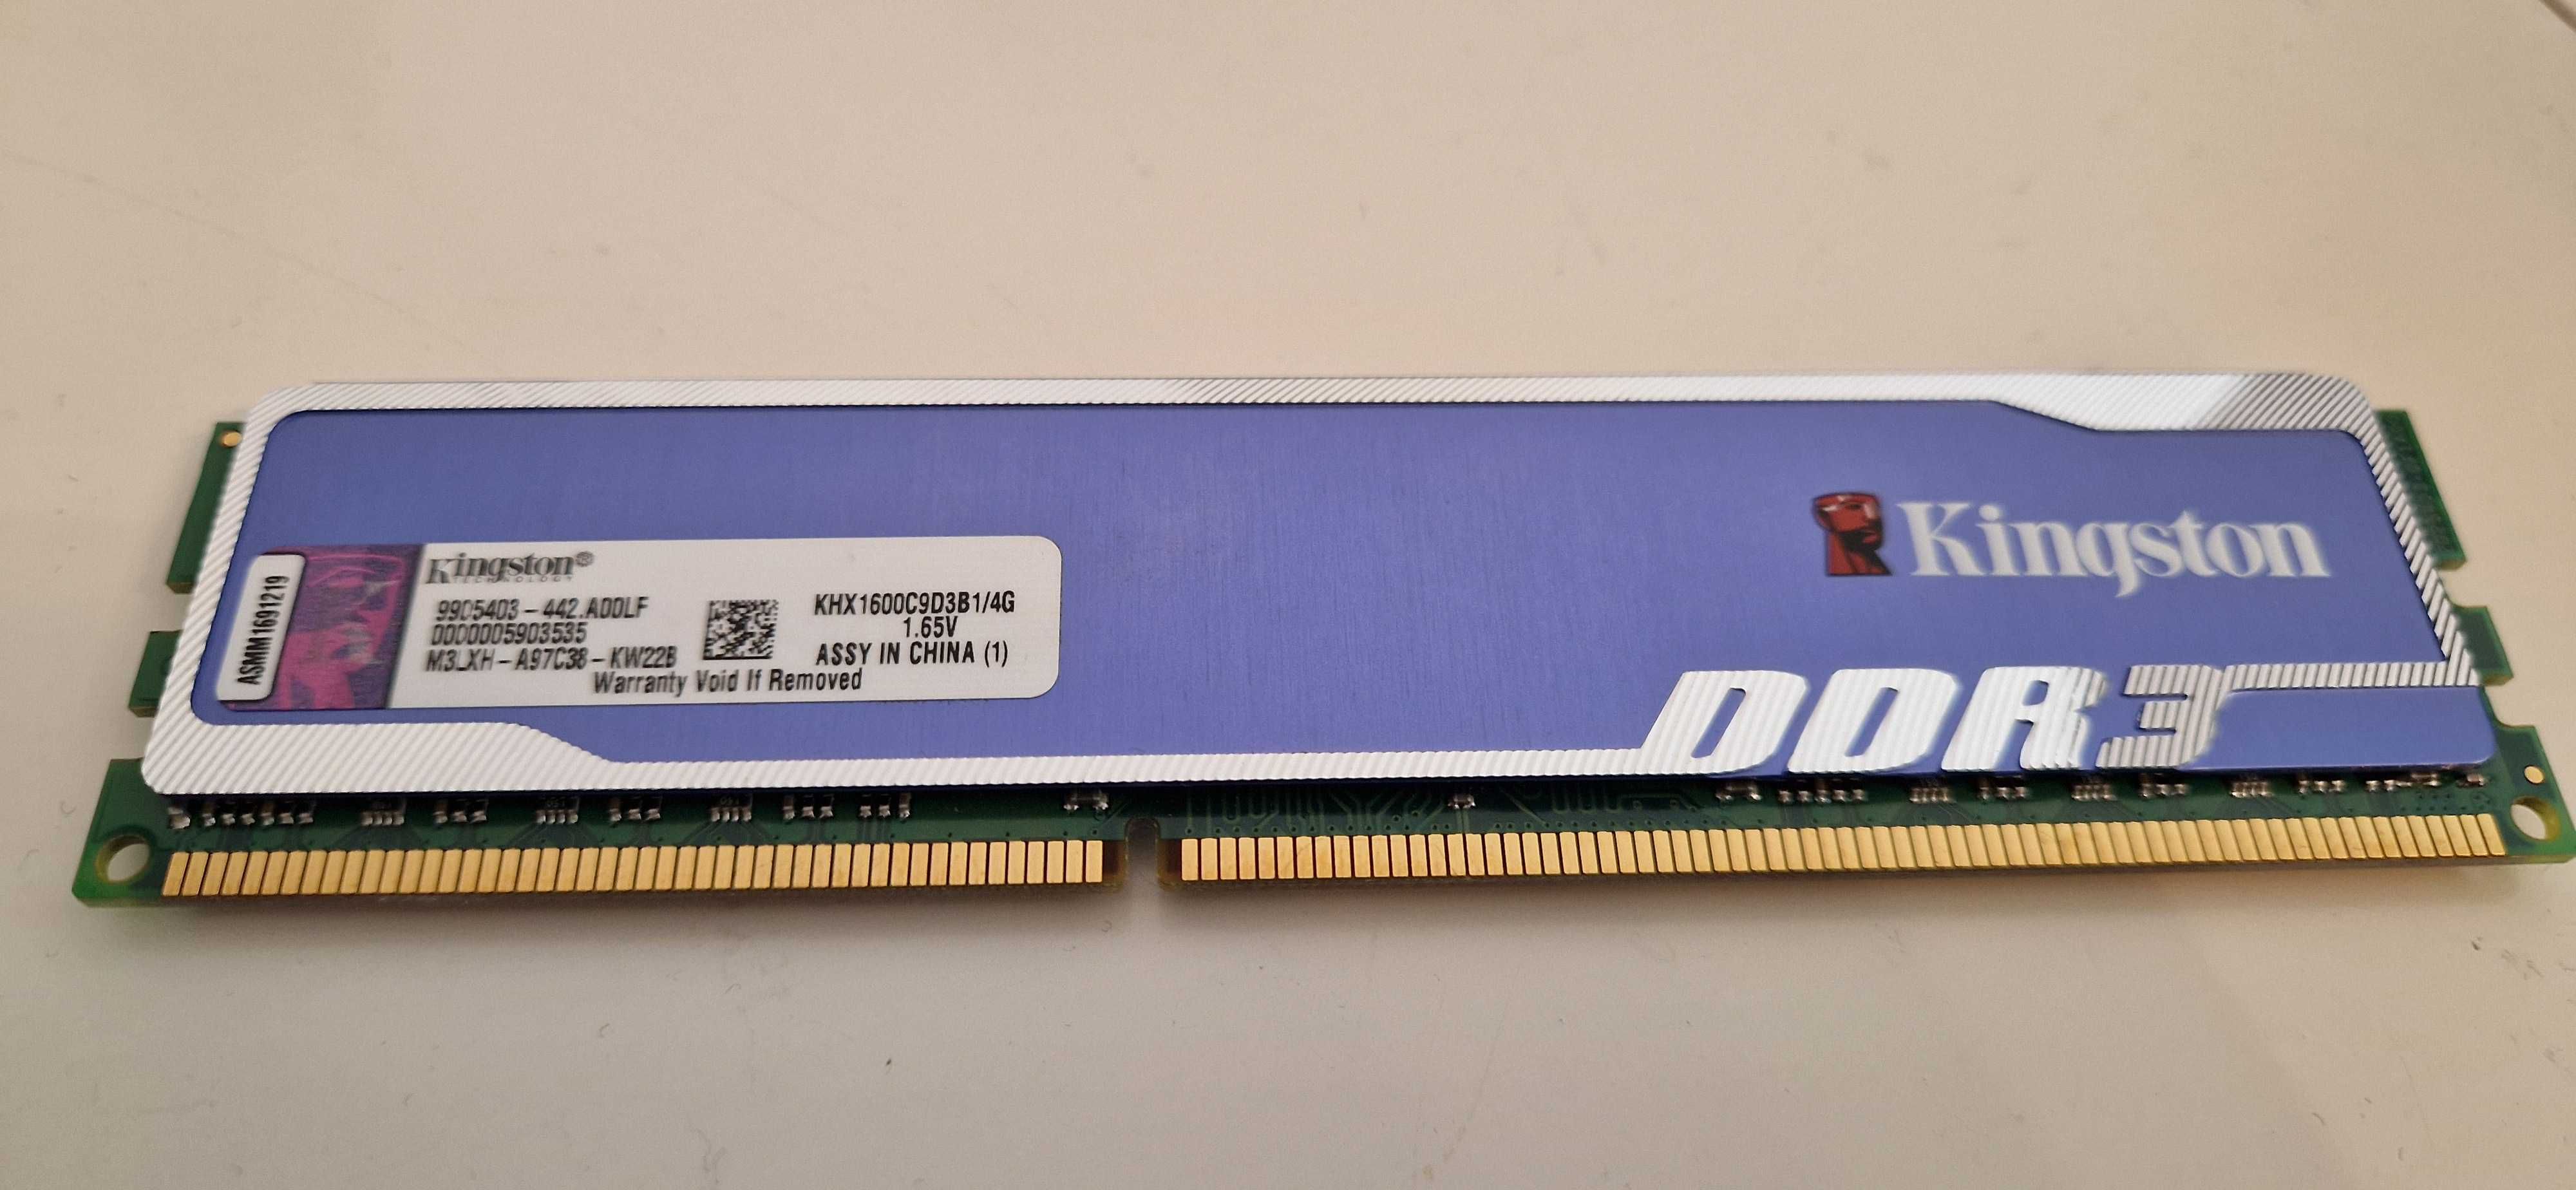 KingstonHyperX blu 12GB (3x4) DDR3 1600